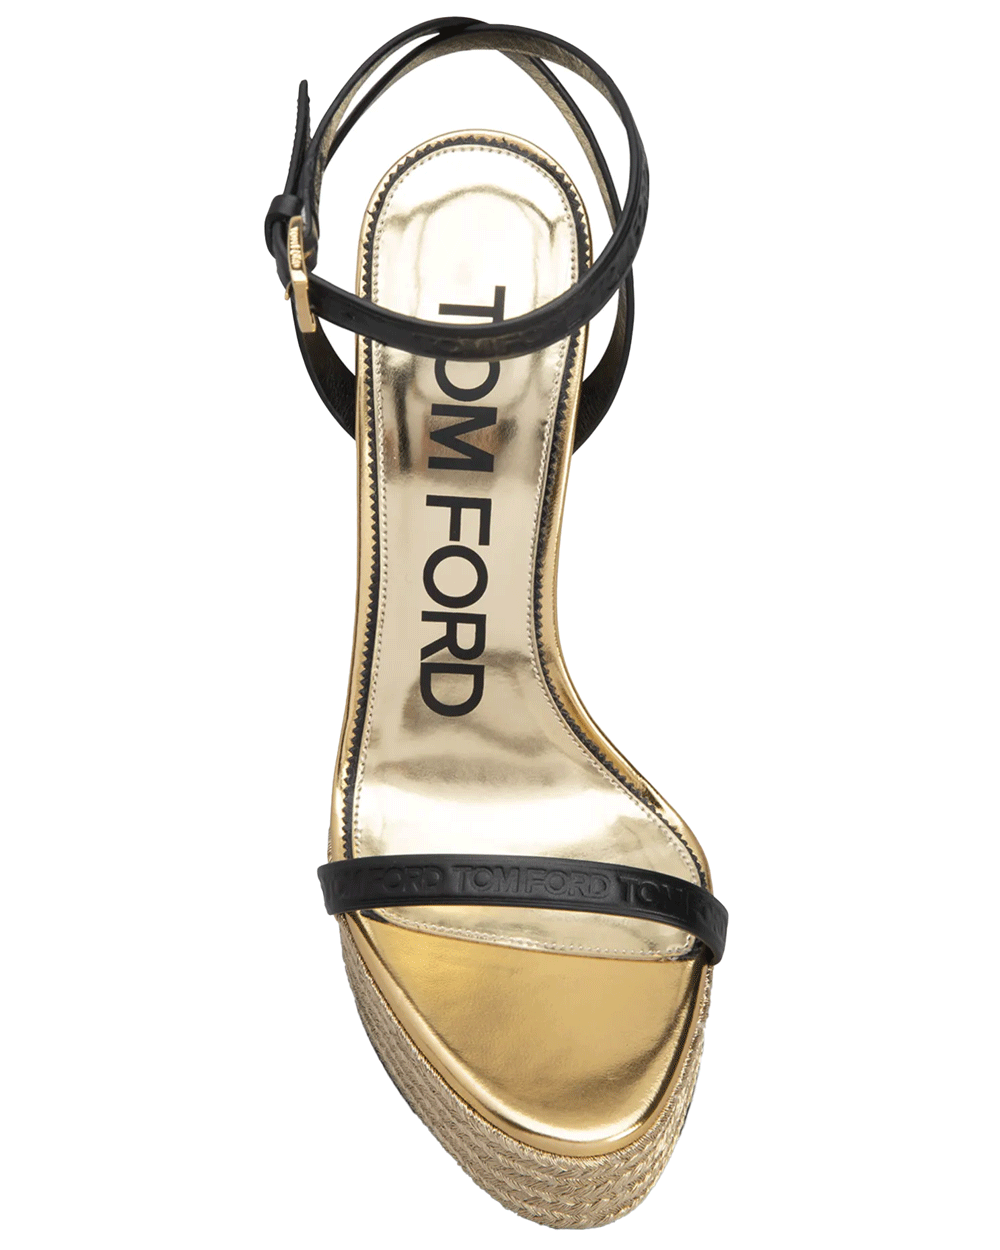 Metallic Rope Platform Sandal in Black and Gold